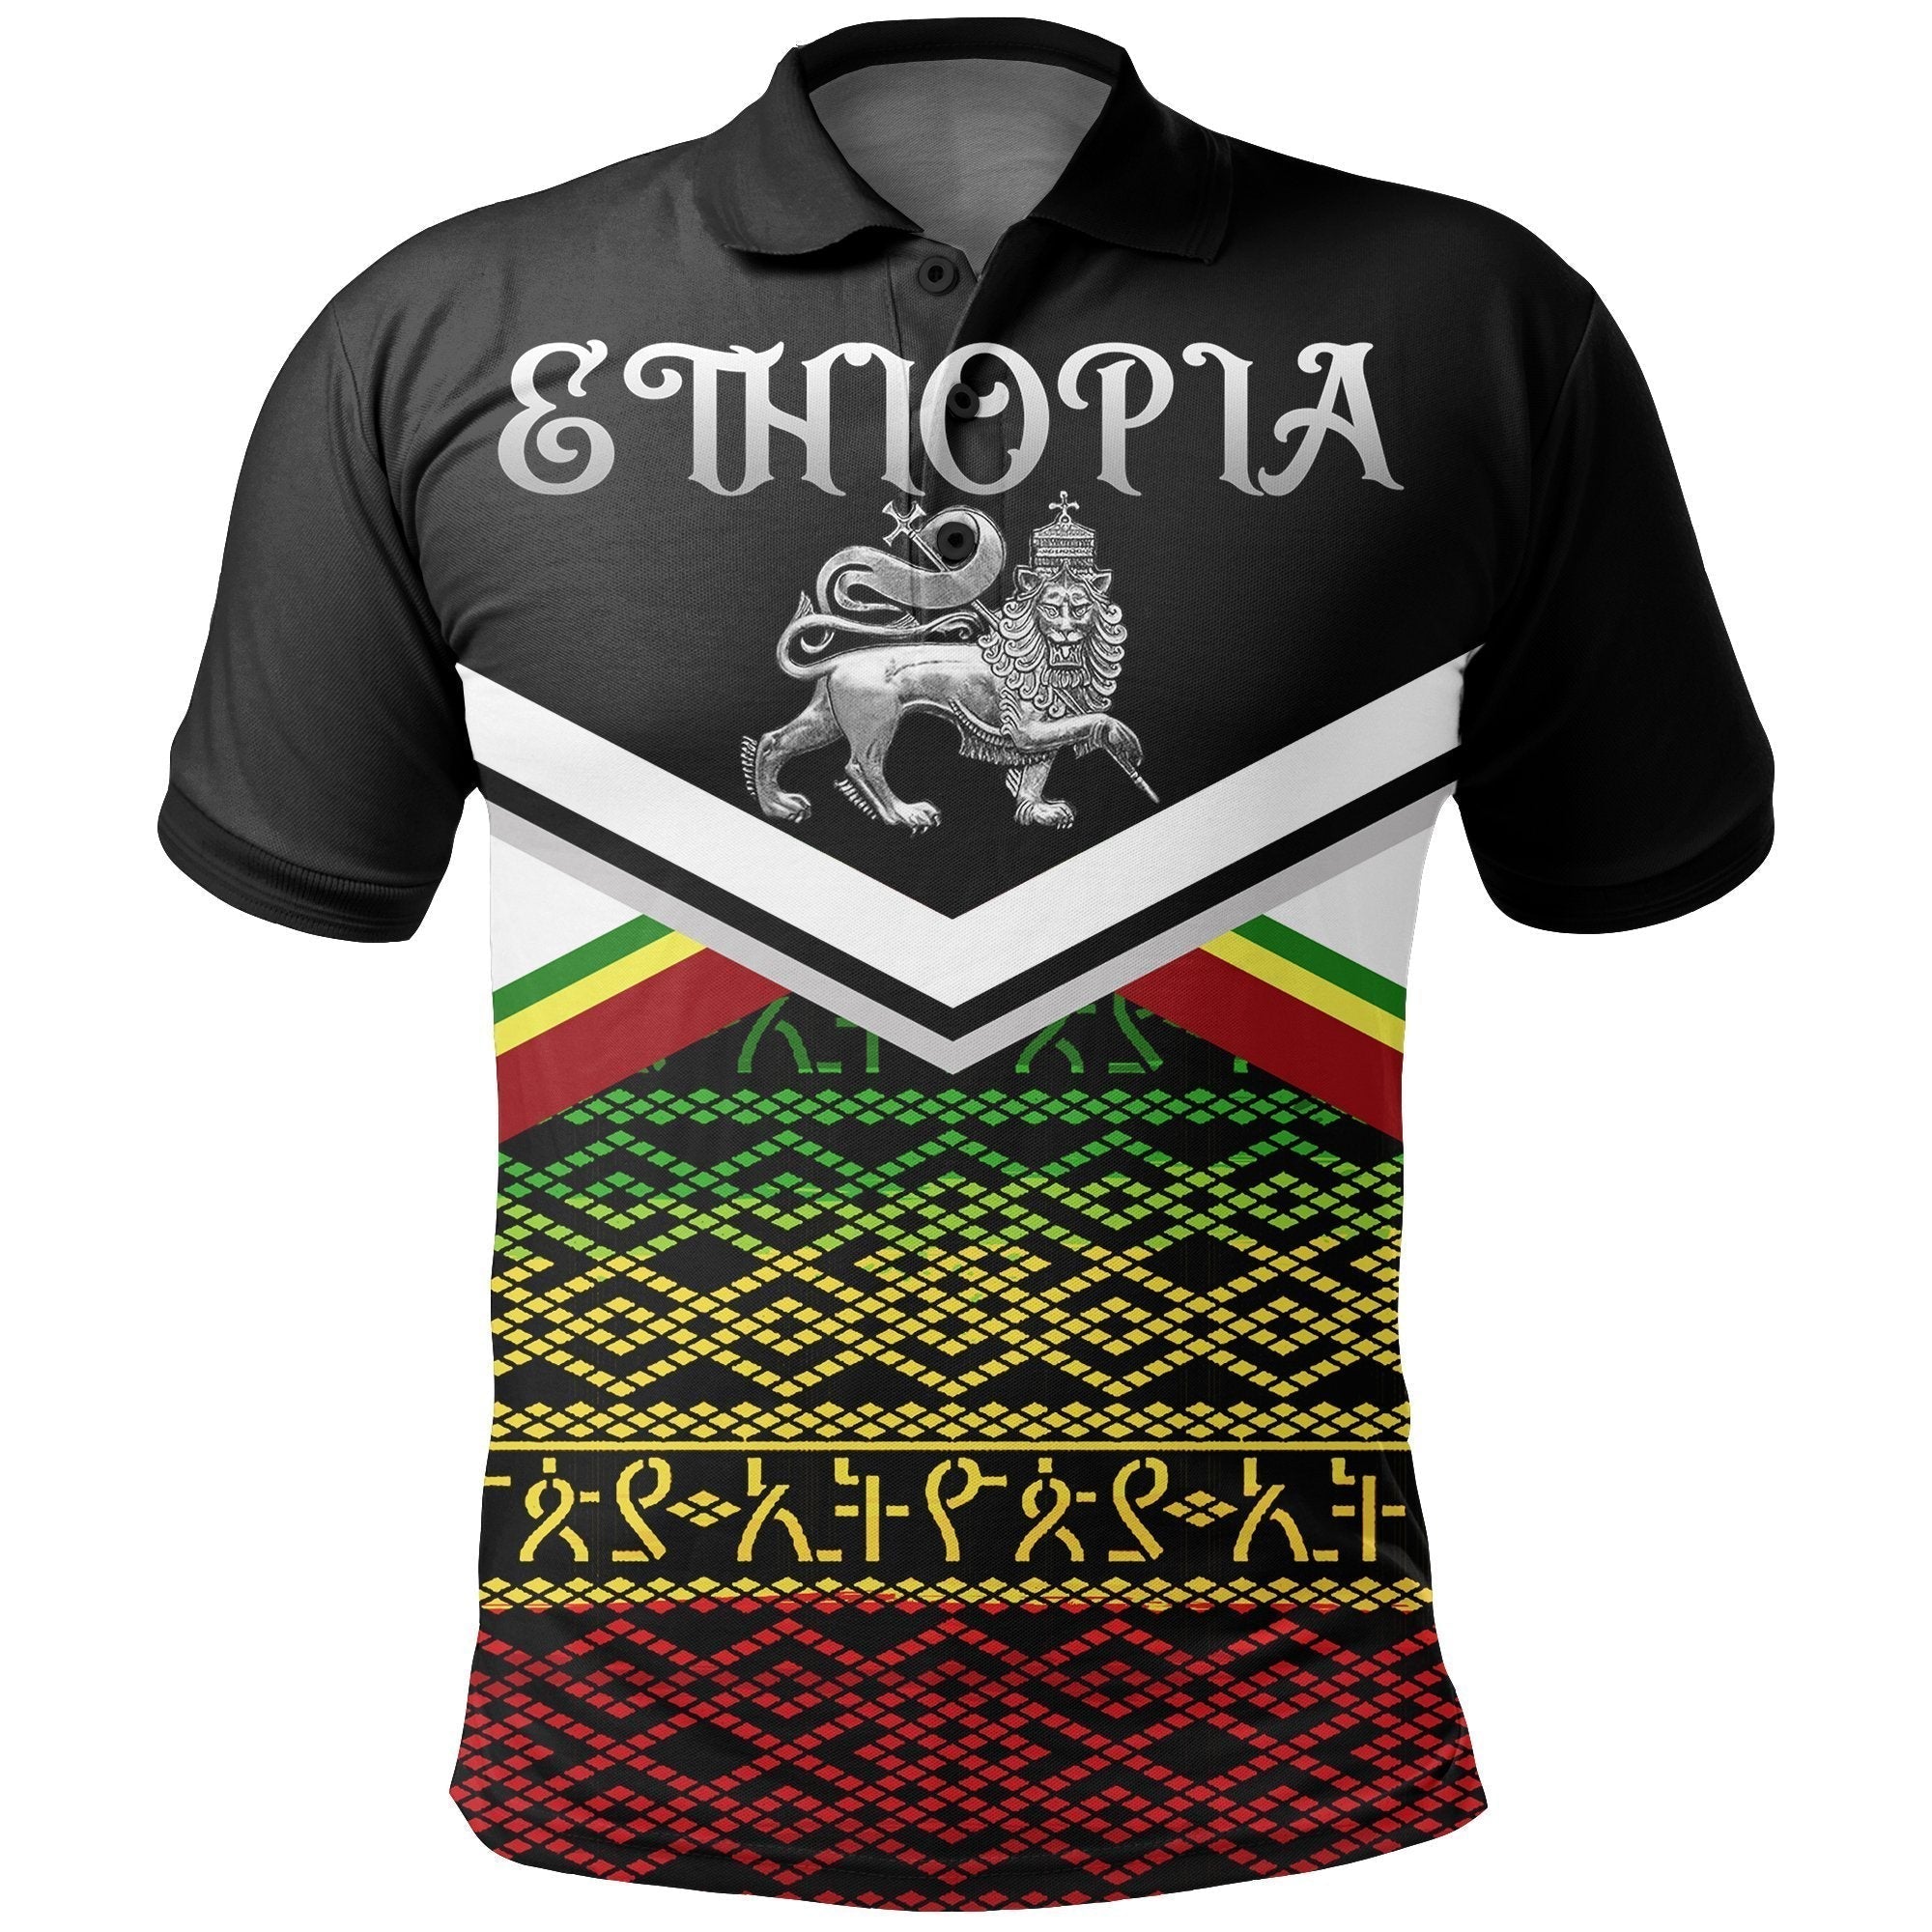 african-shirt-great-ethiopia-polo-shirt